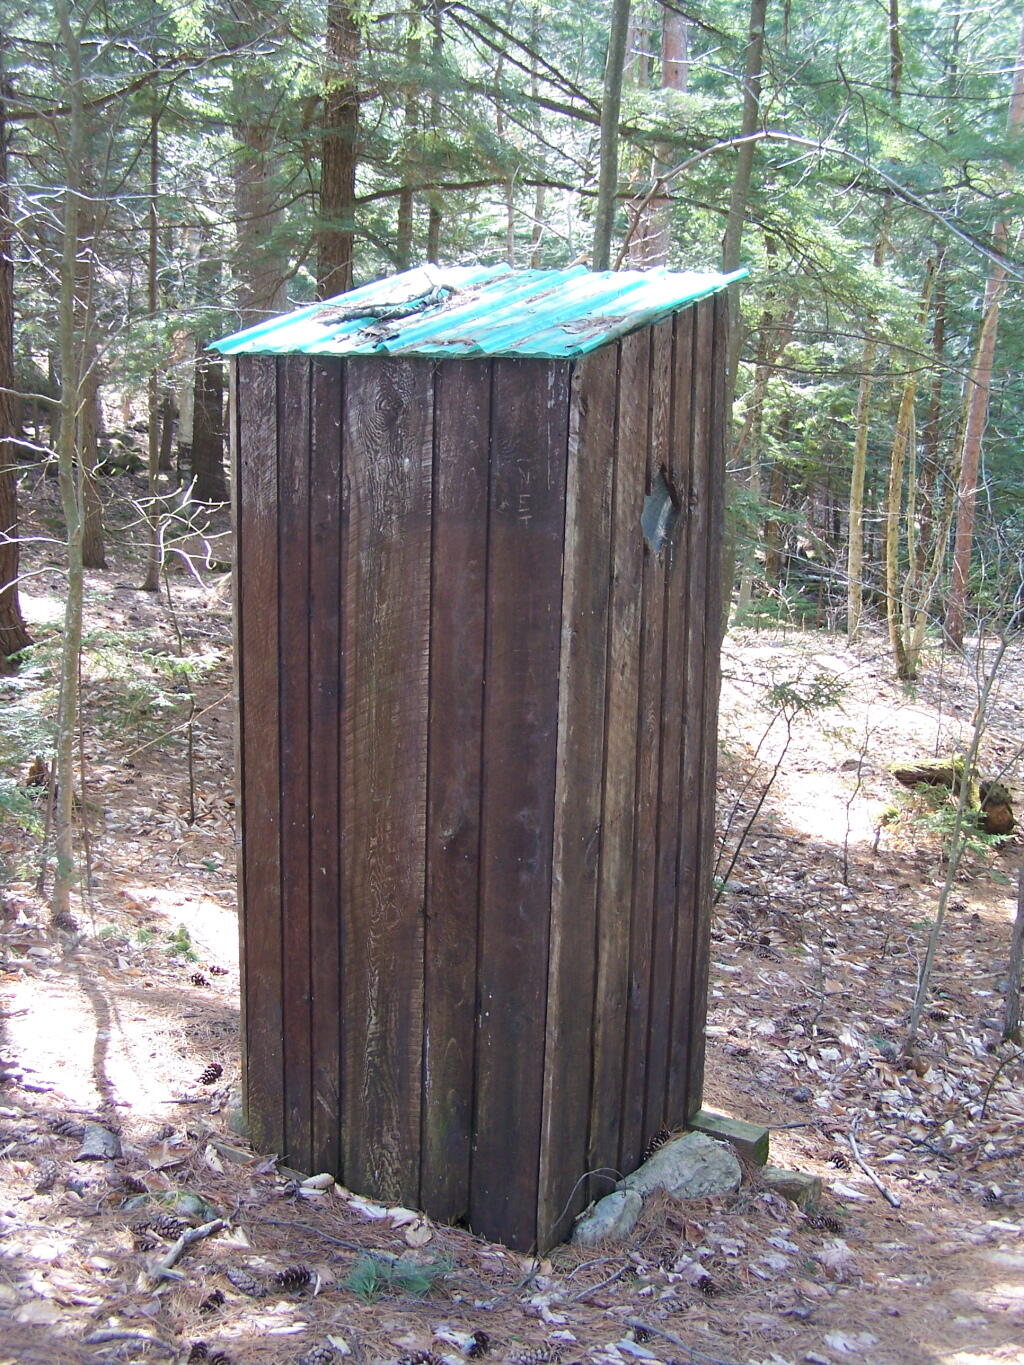  Oxbow Pond Outhouse